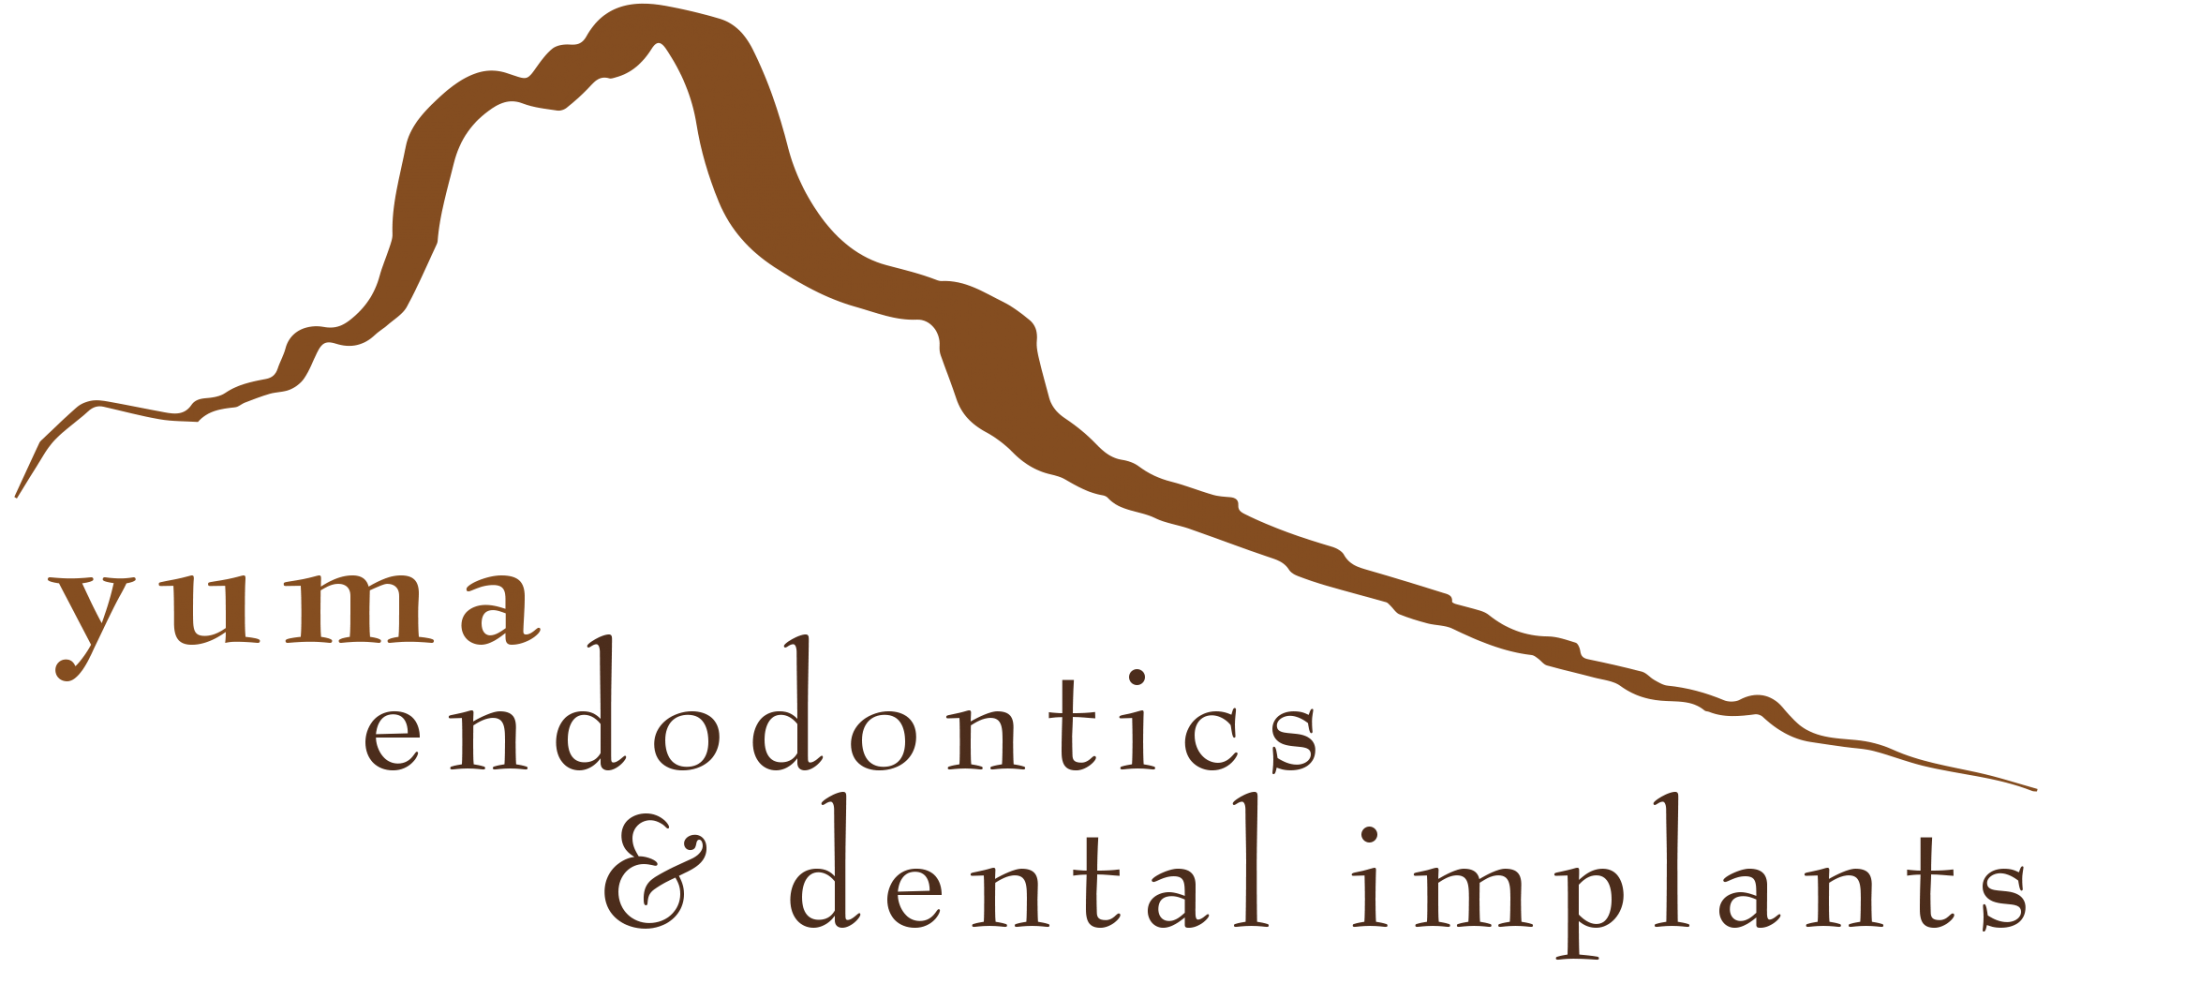 Link to Yuma Endodontics and Dental Implants home page